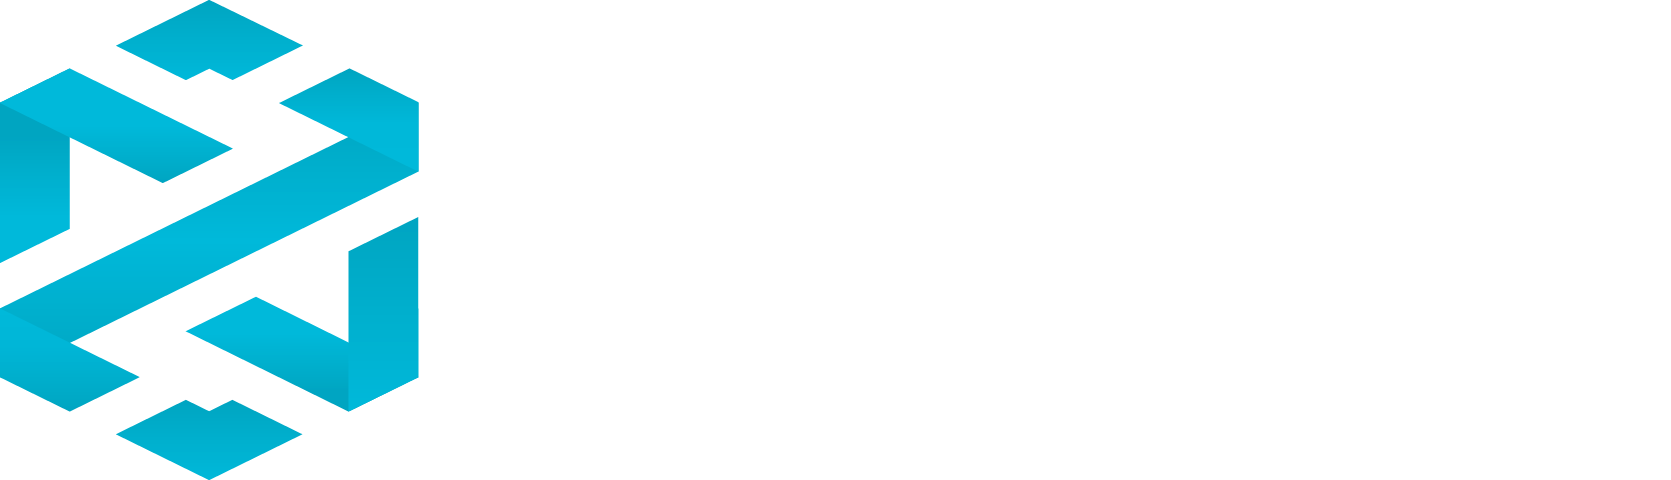 dextools-light